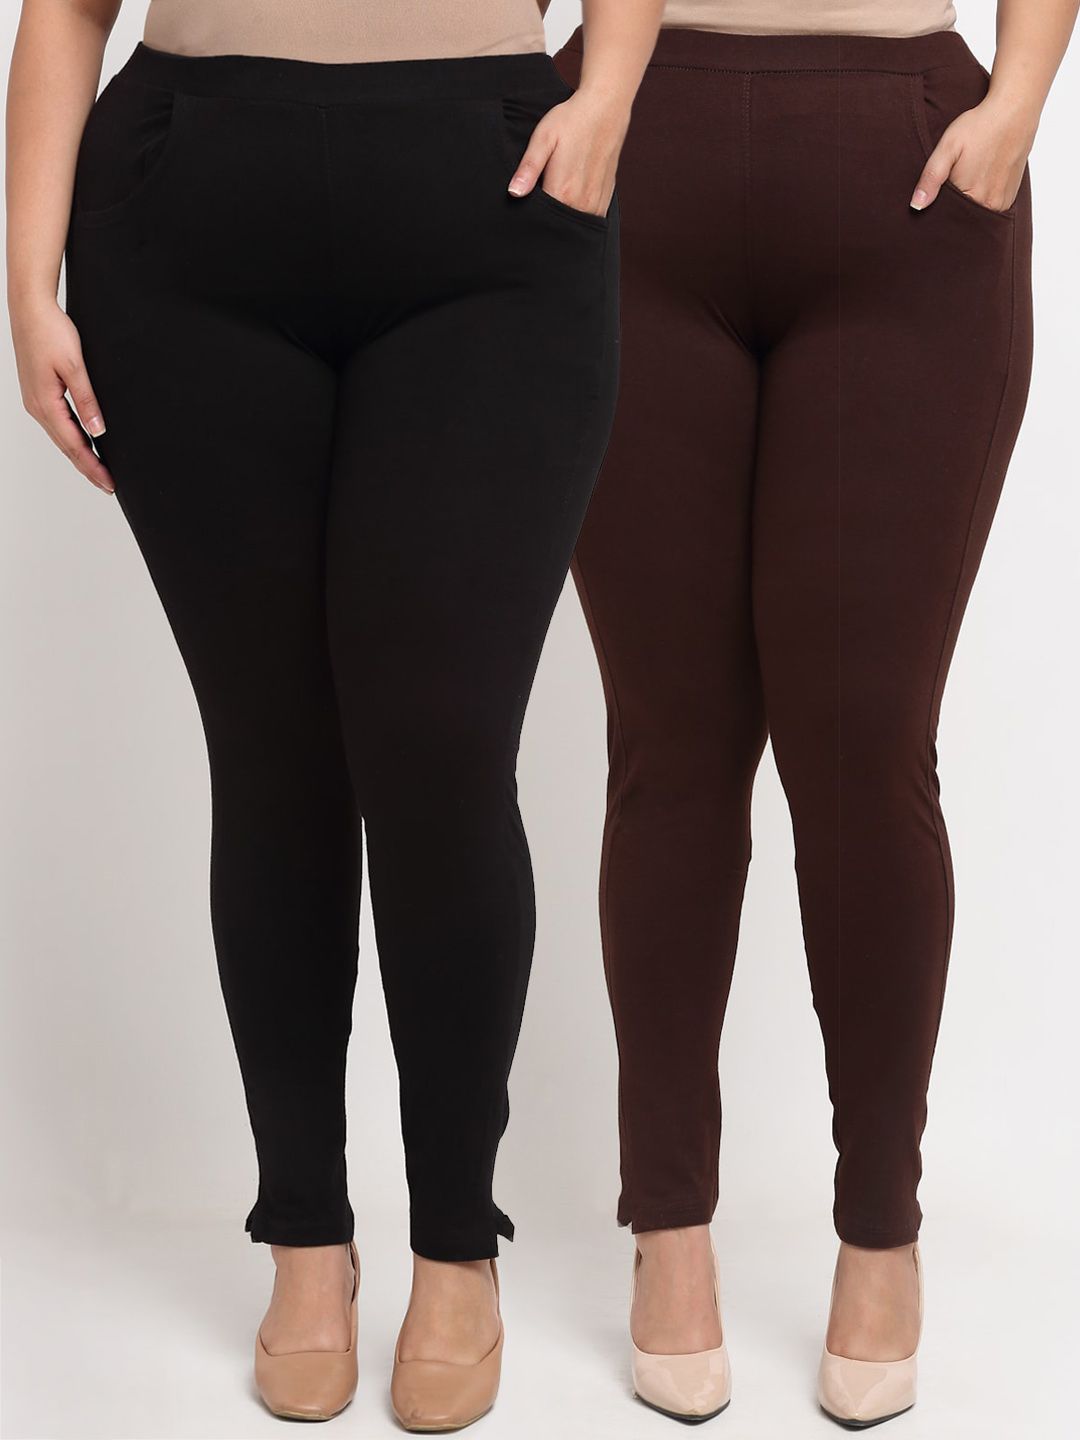 KLOTTHE Women Plus Size Pack of 2 Black & Brown Solid Leggings Price in India